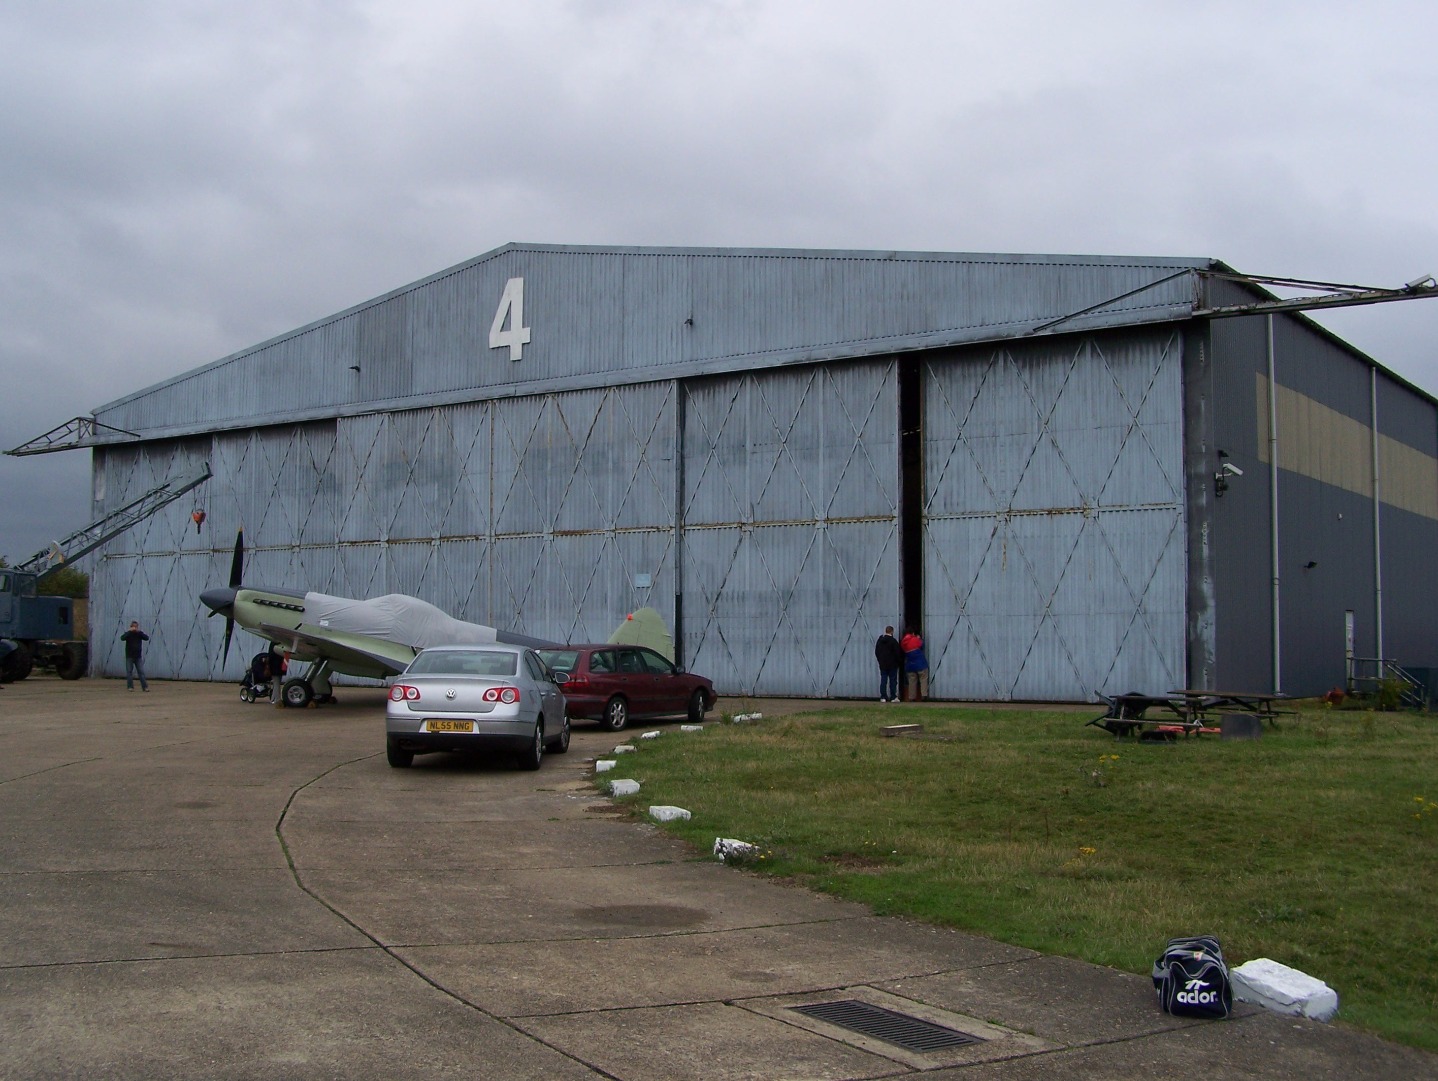 005Supermarine Seafire Mk XVII in front of T2 hangar.JPG